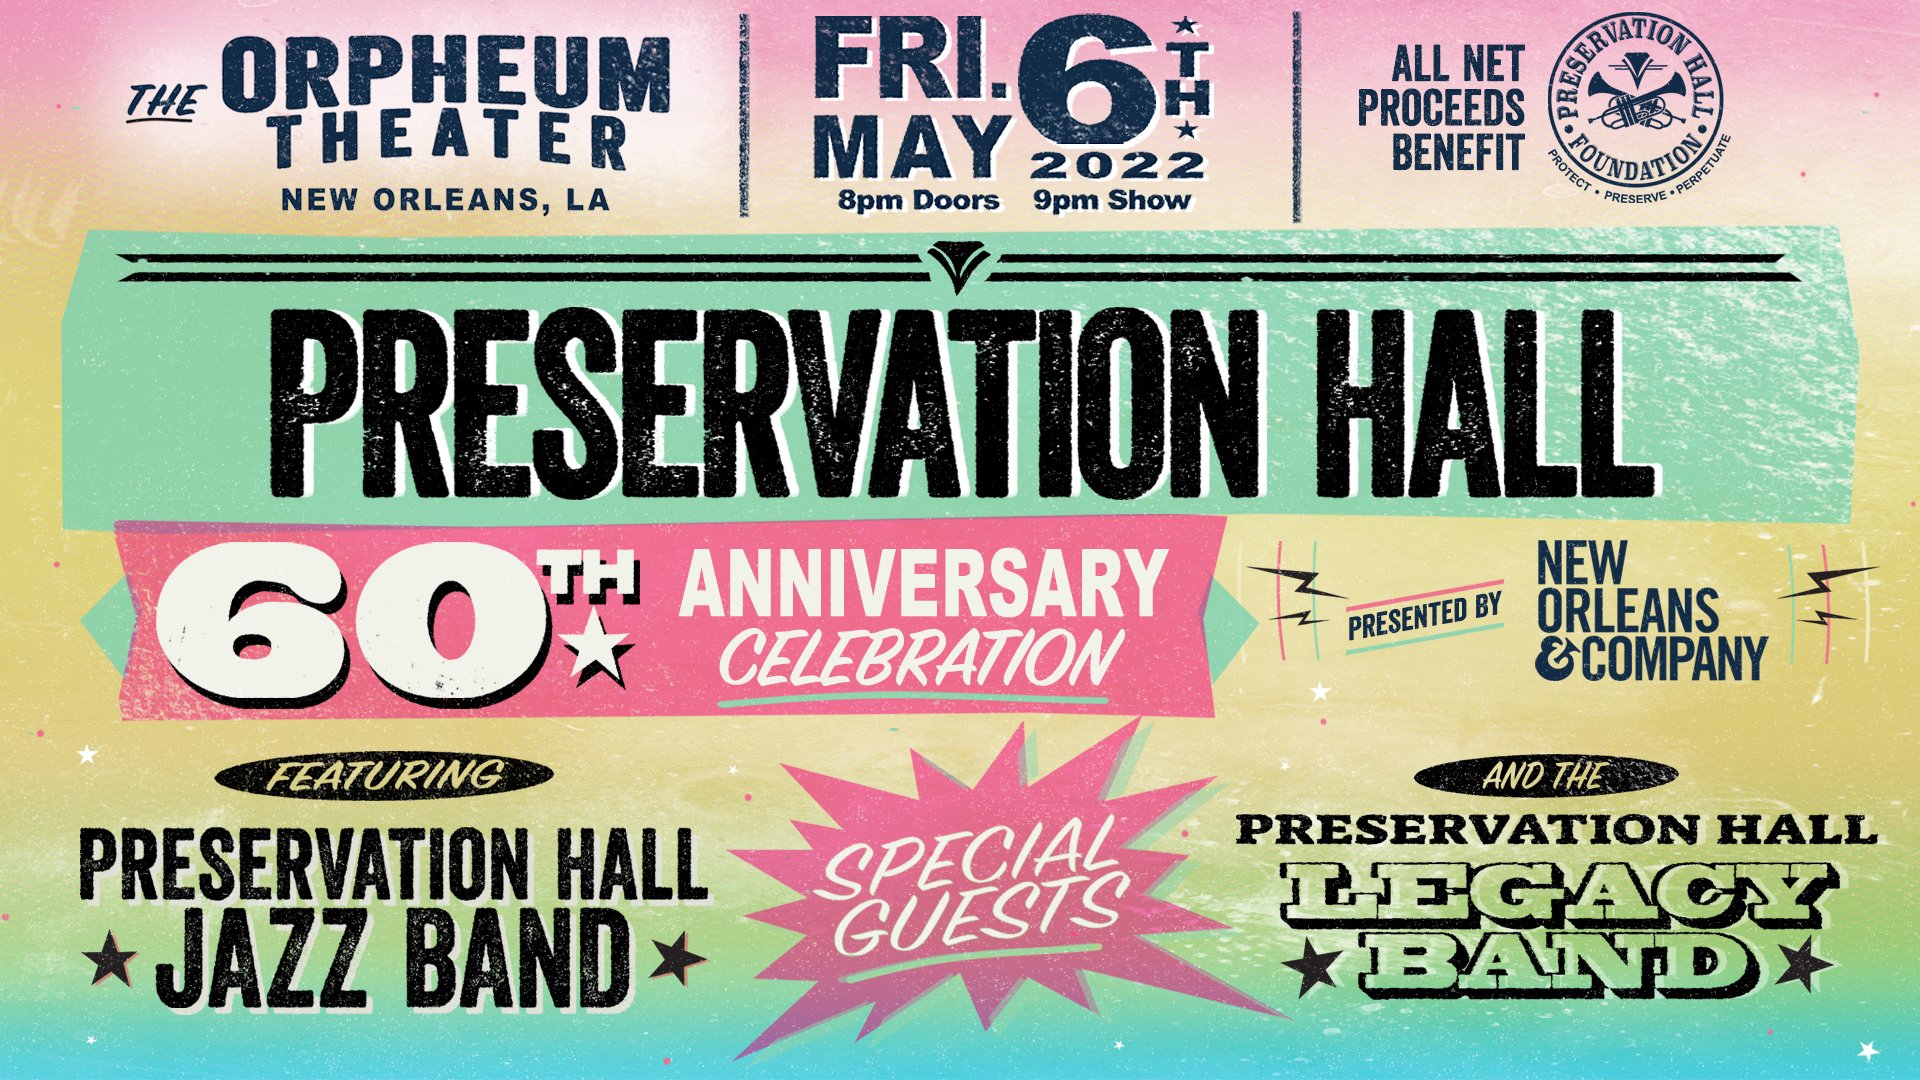 Preservation Hall's 60th Anniversary Celebration 